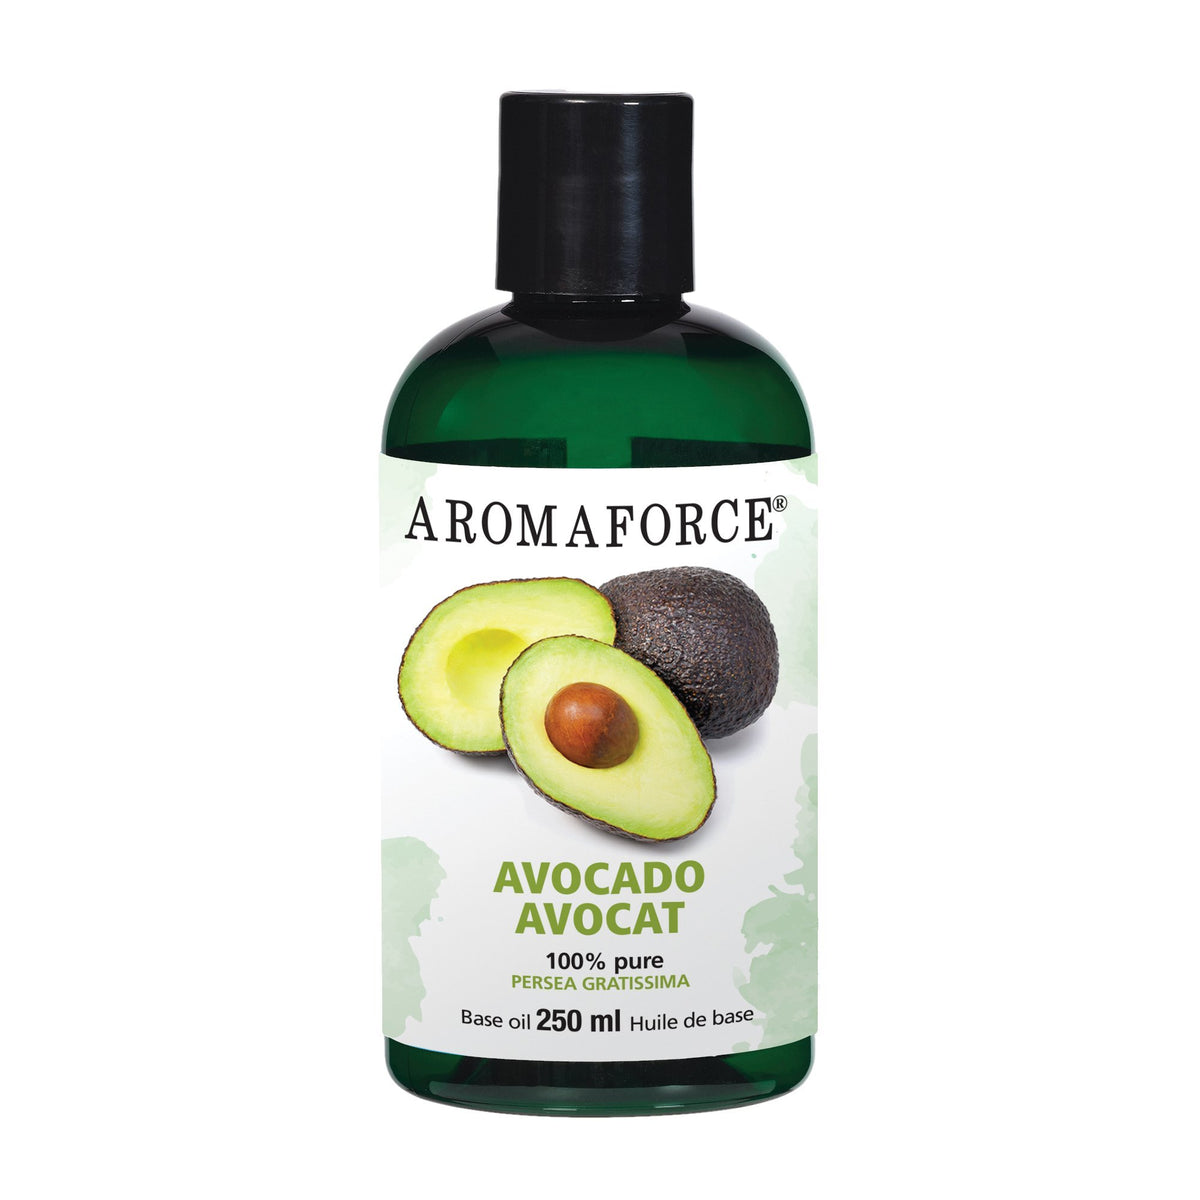 Aromaforce Avocado Oil 250mL - A.Vogel Canada